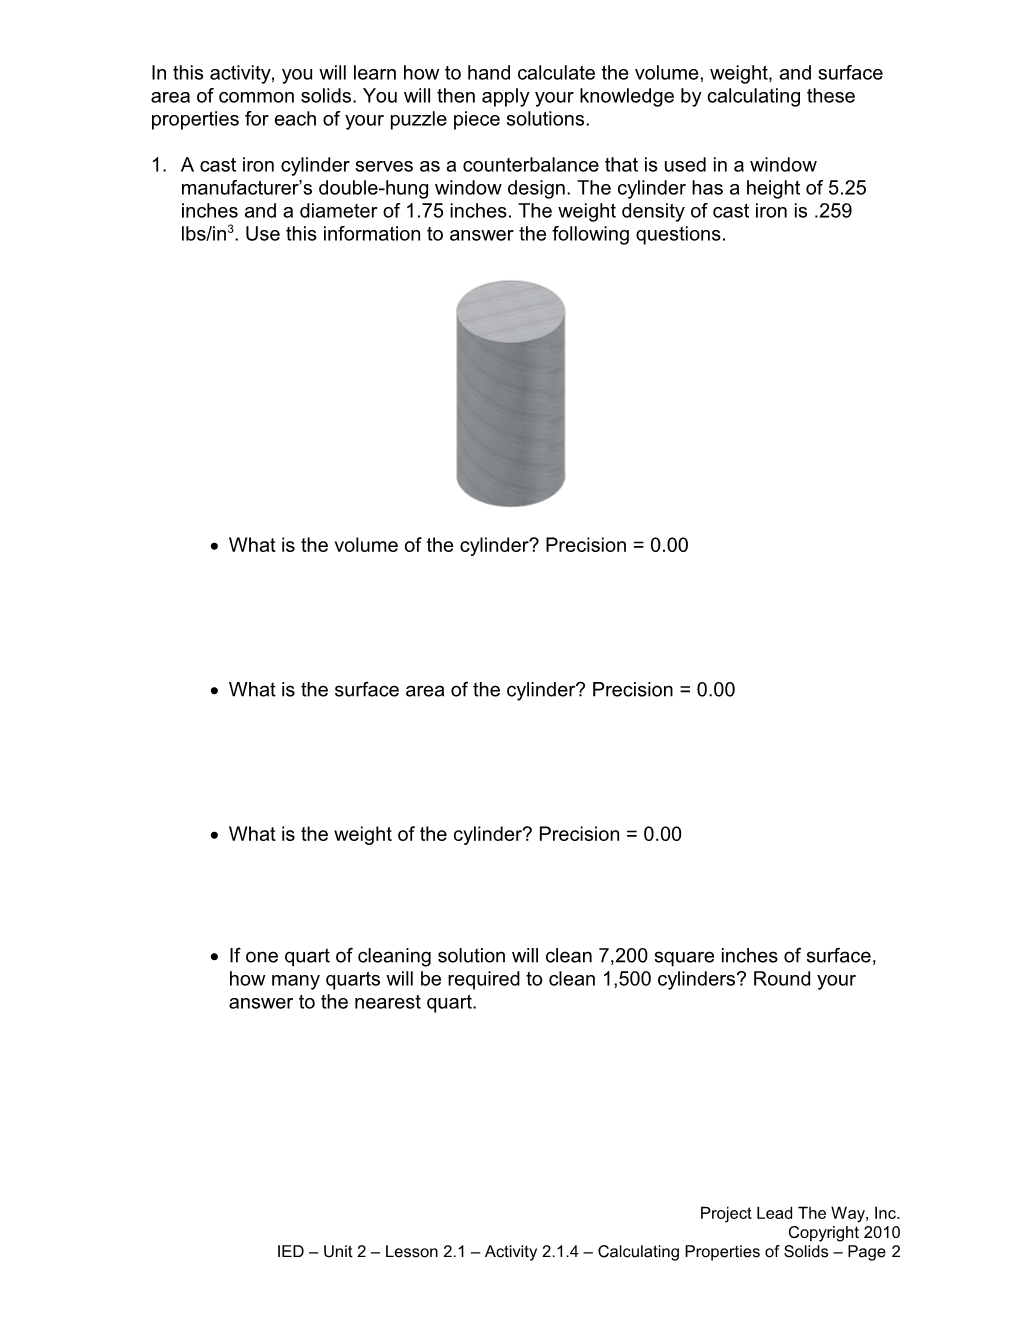 Activity 2.1.4: Calculating Properties of Solids s1